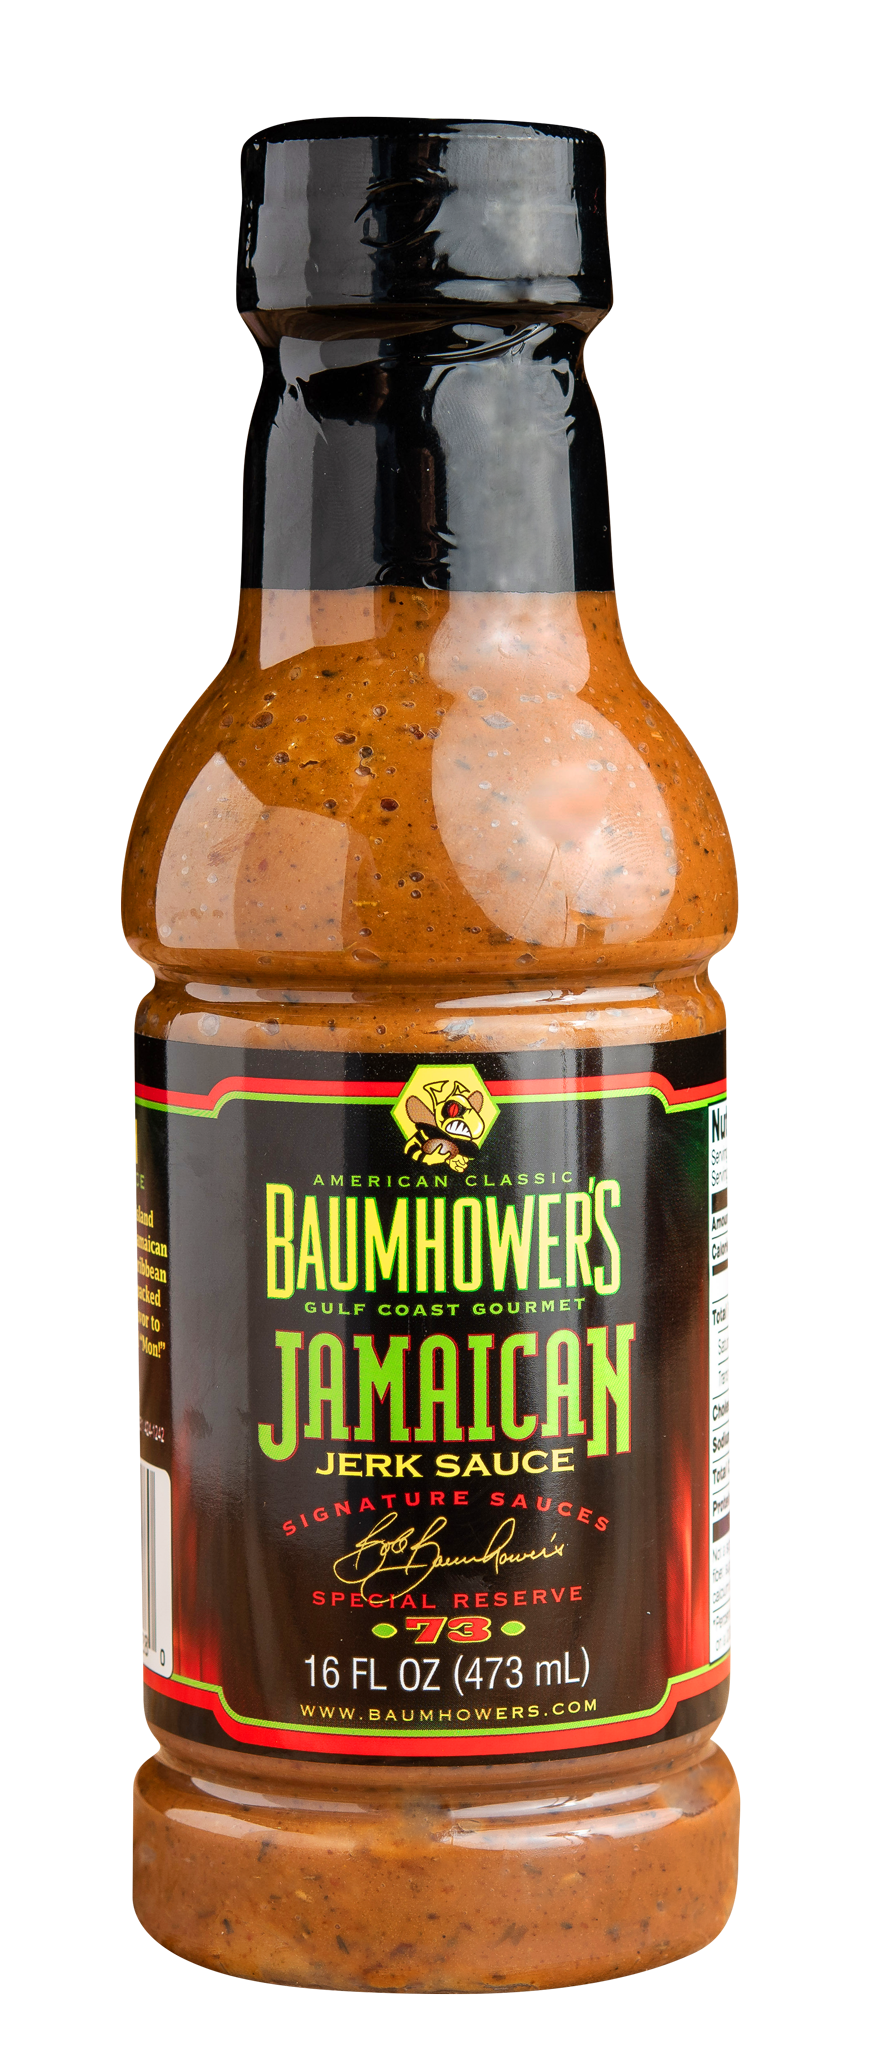 Baumhower's Jamaican Jerk Sauce